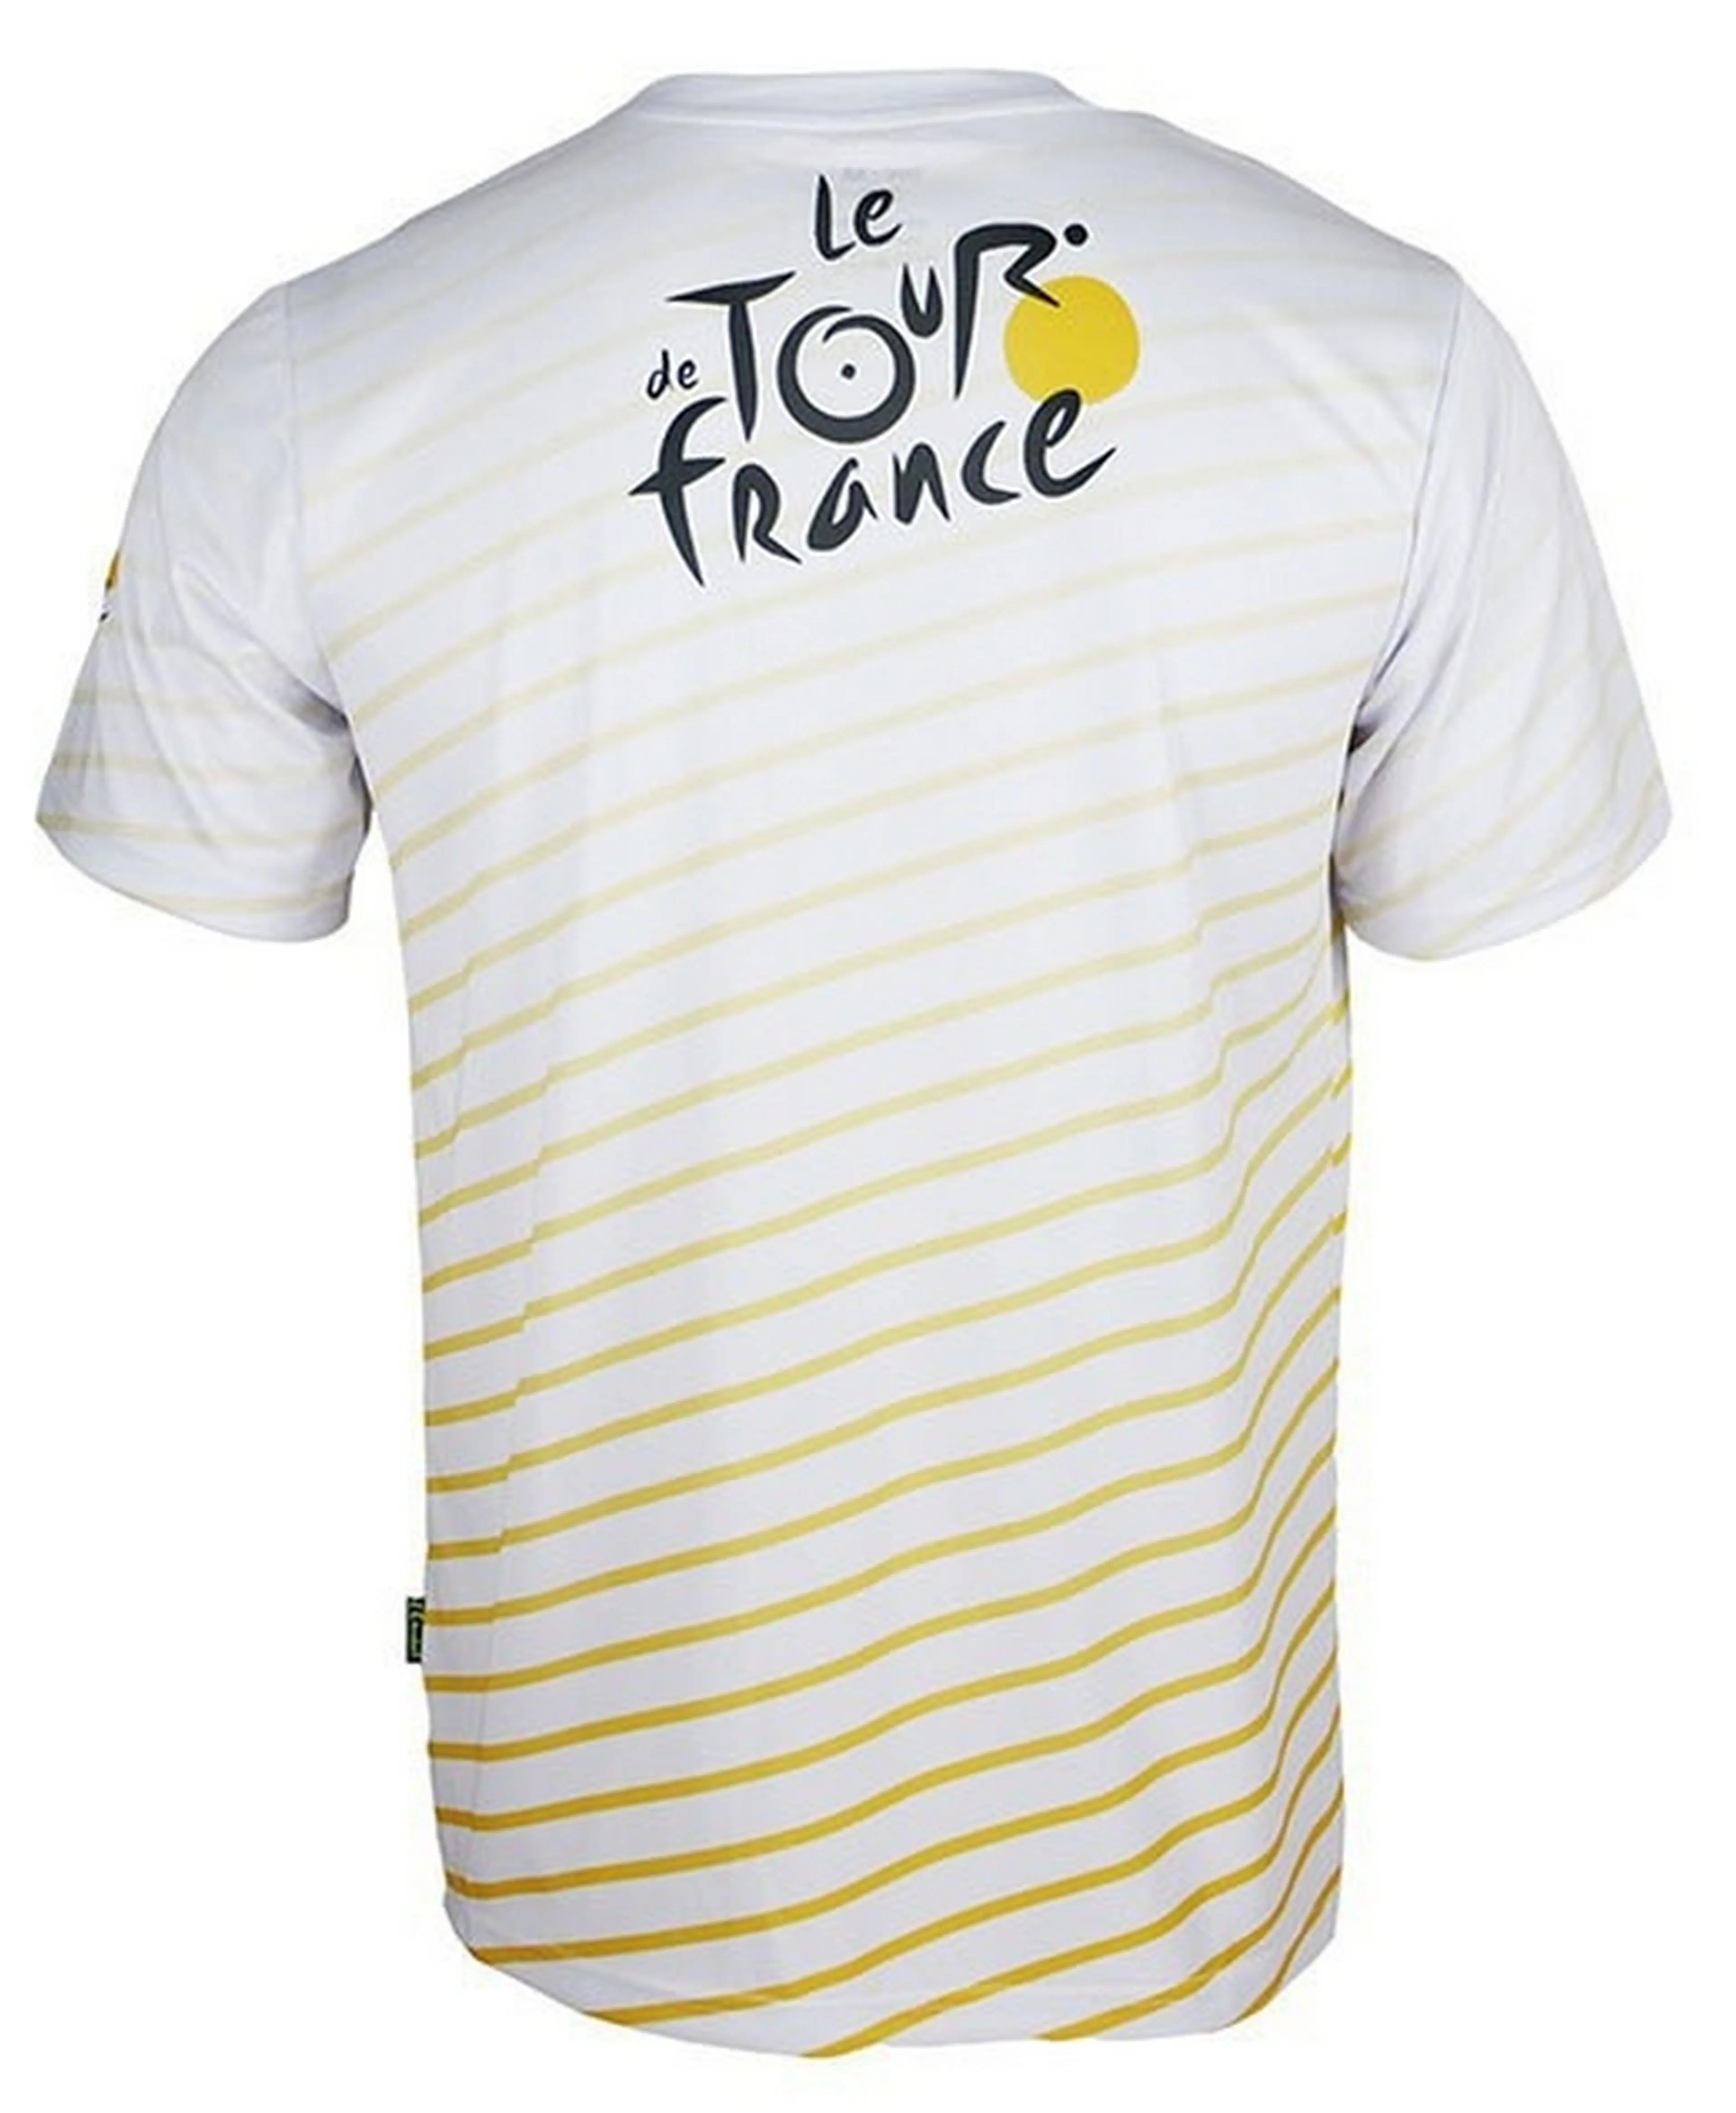 4. Tricou Tour de France t7 replica